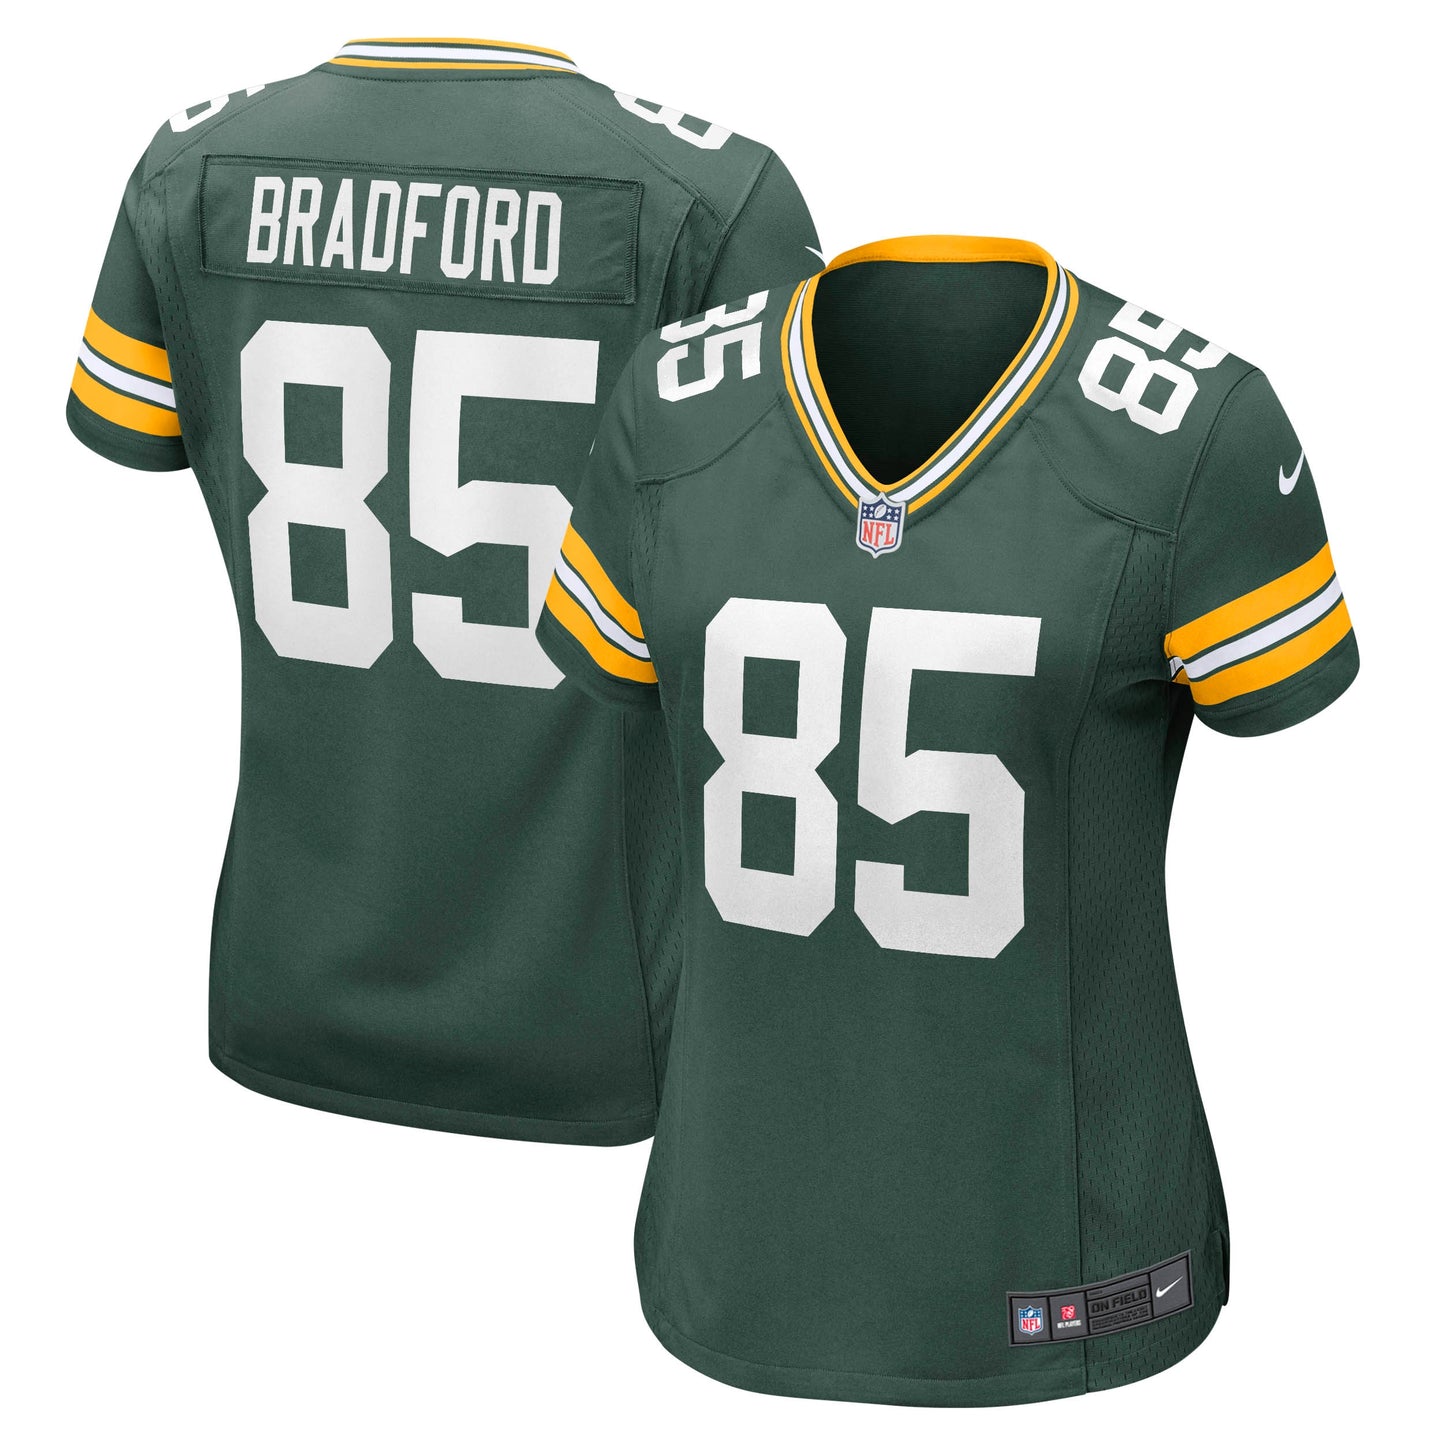 Corey Bradford Green Bay Packers Nike Women's Retired Player Jersey - Green